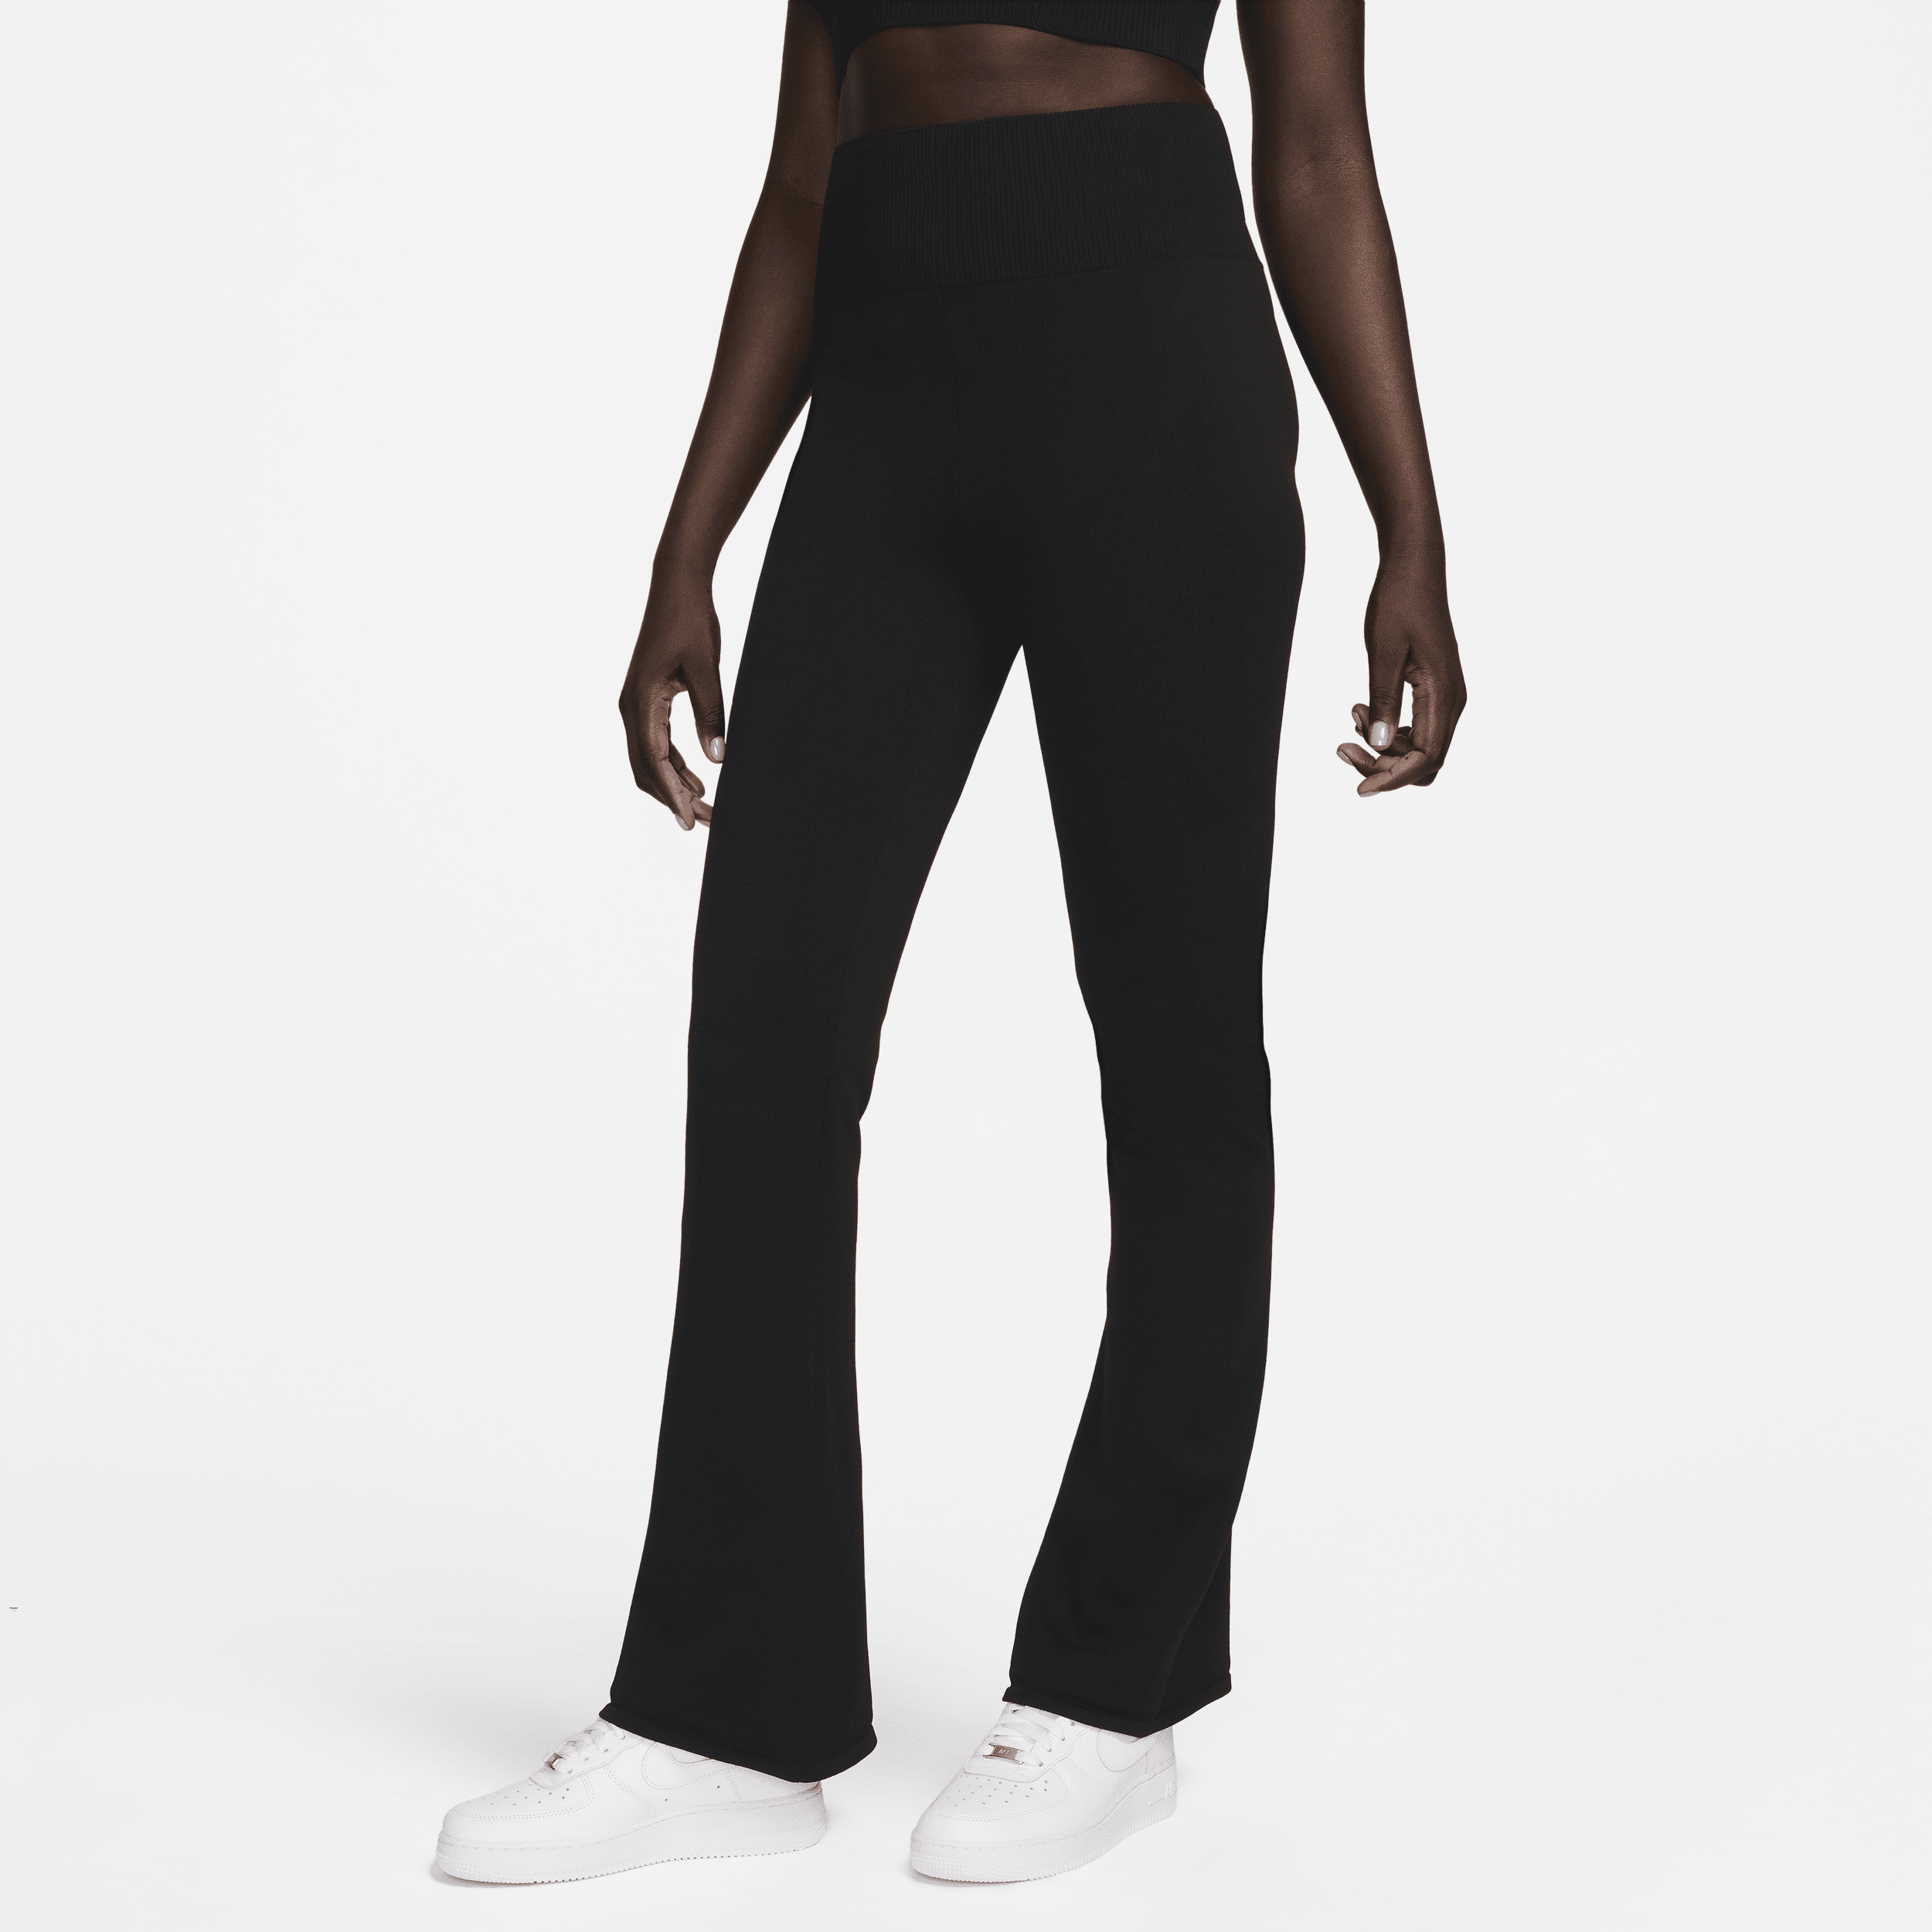 Pantaloni svasati aderenti a vita alta Nike Sportswear Chill Knit – Donna - Nero